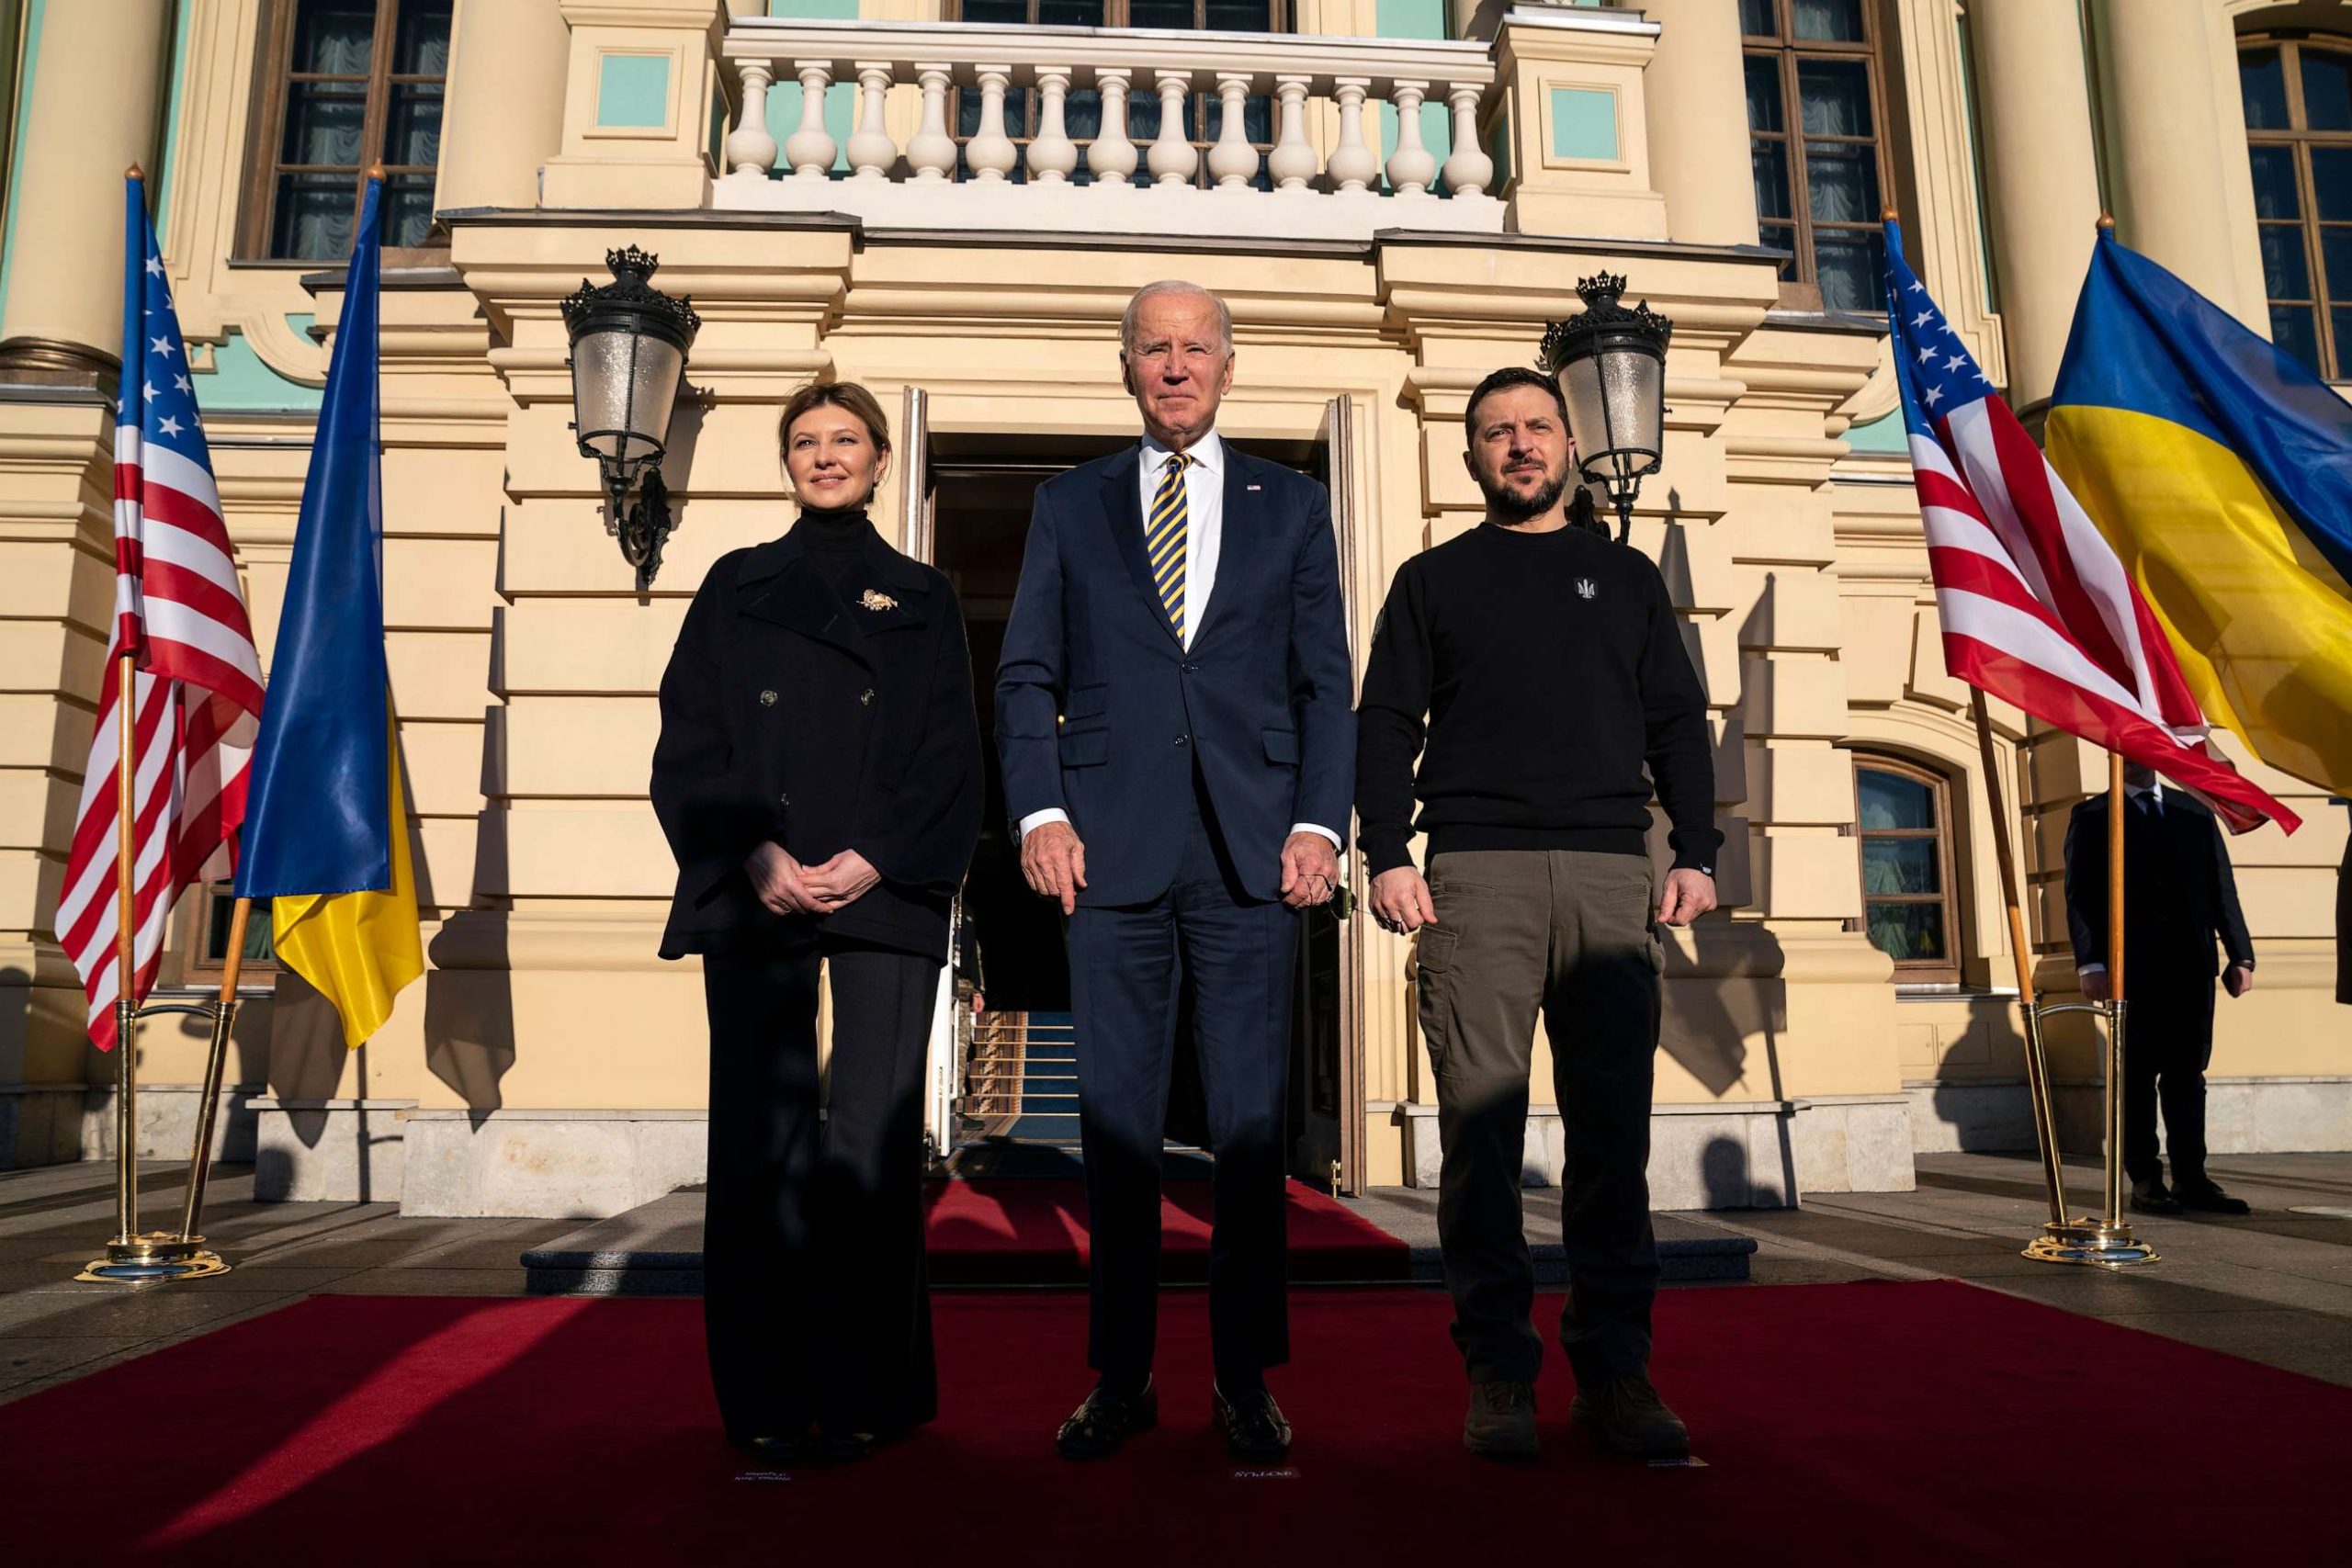 biden and Ukraine president standing